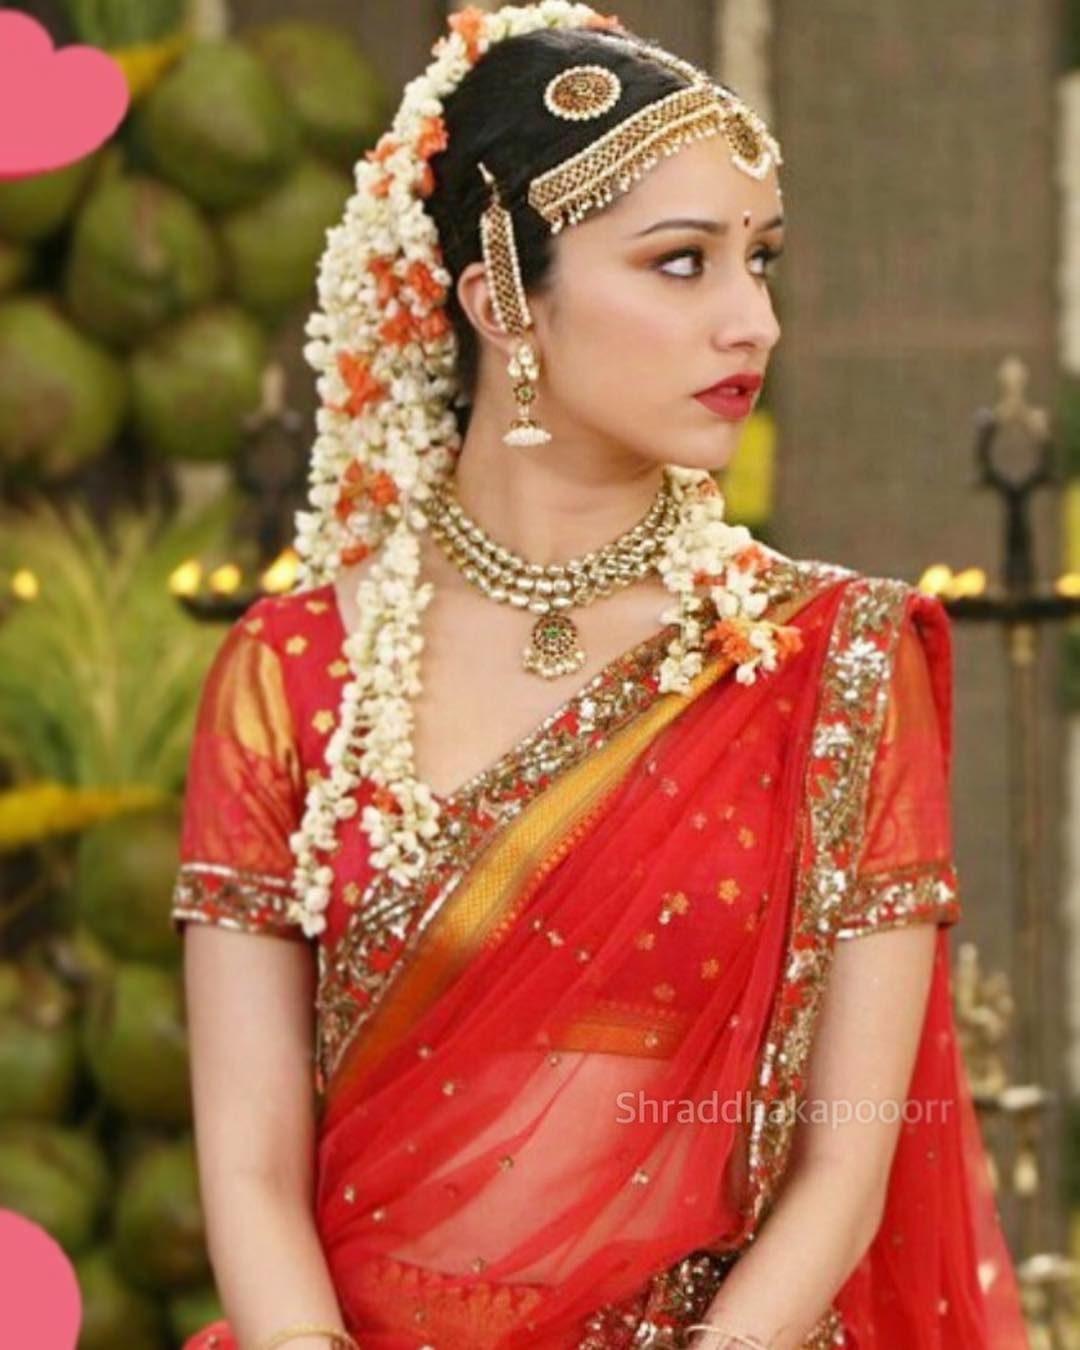 Shraddha Kapoor Most beautiful bride